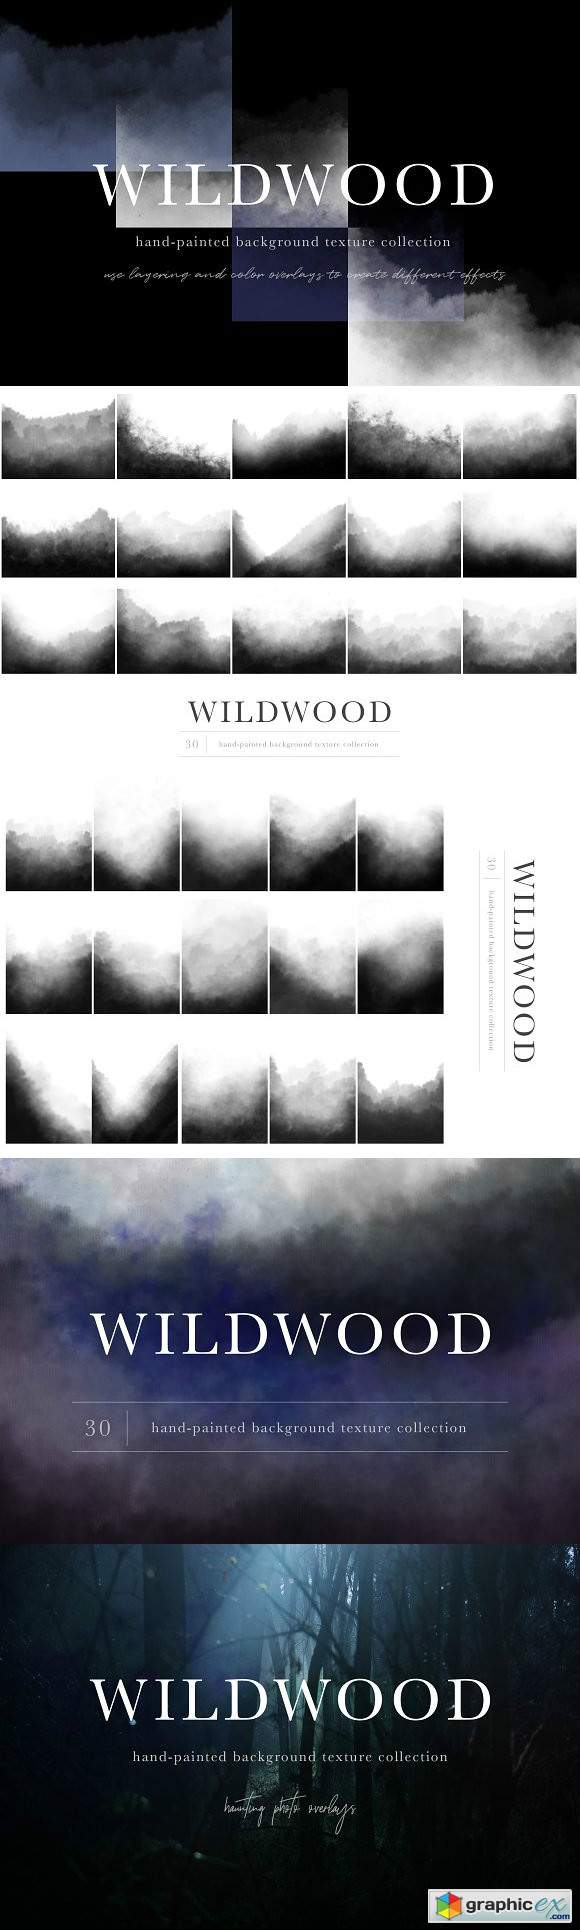 Wildwood Texture Collection